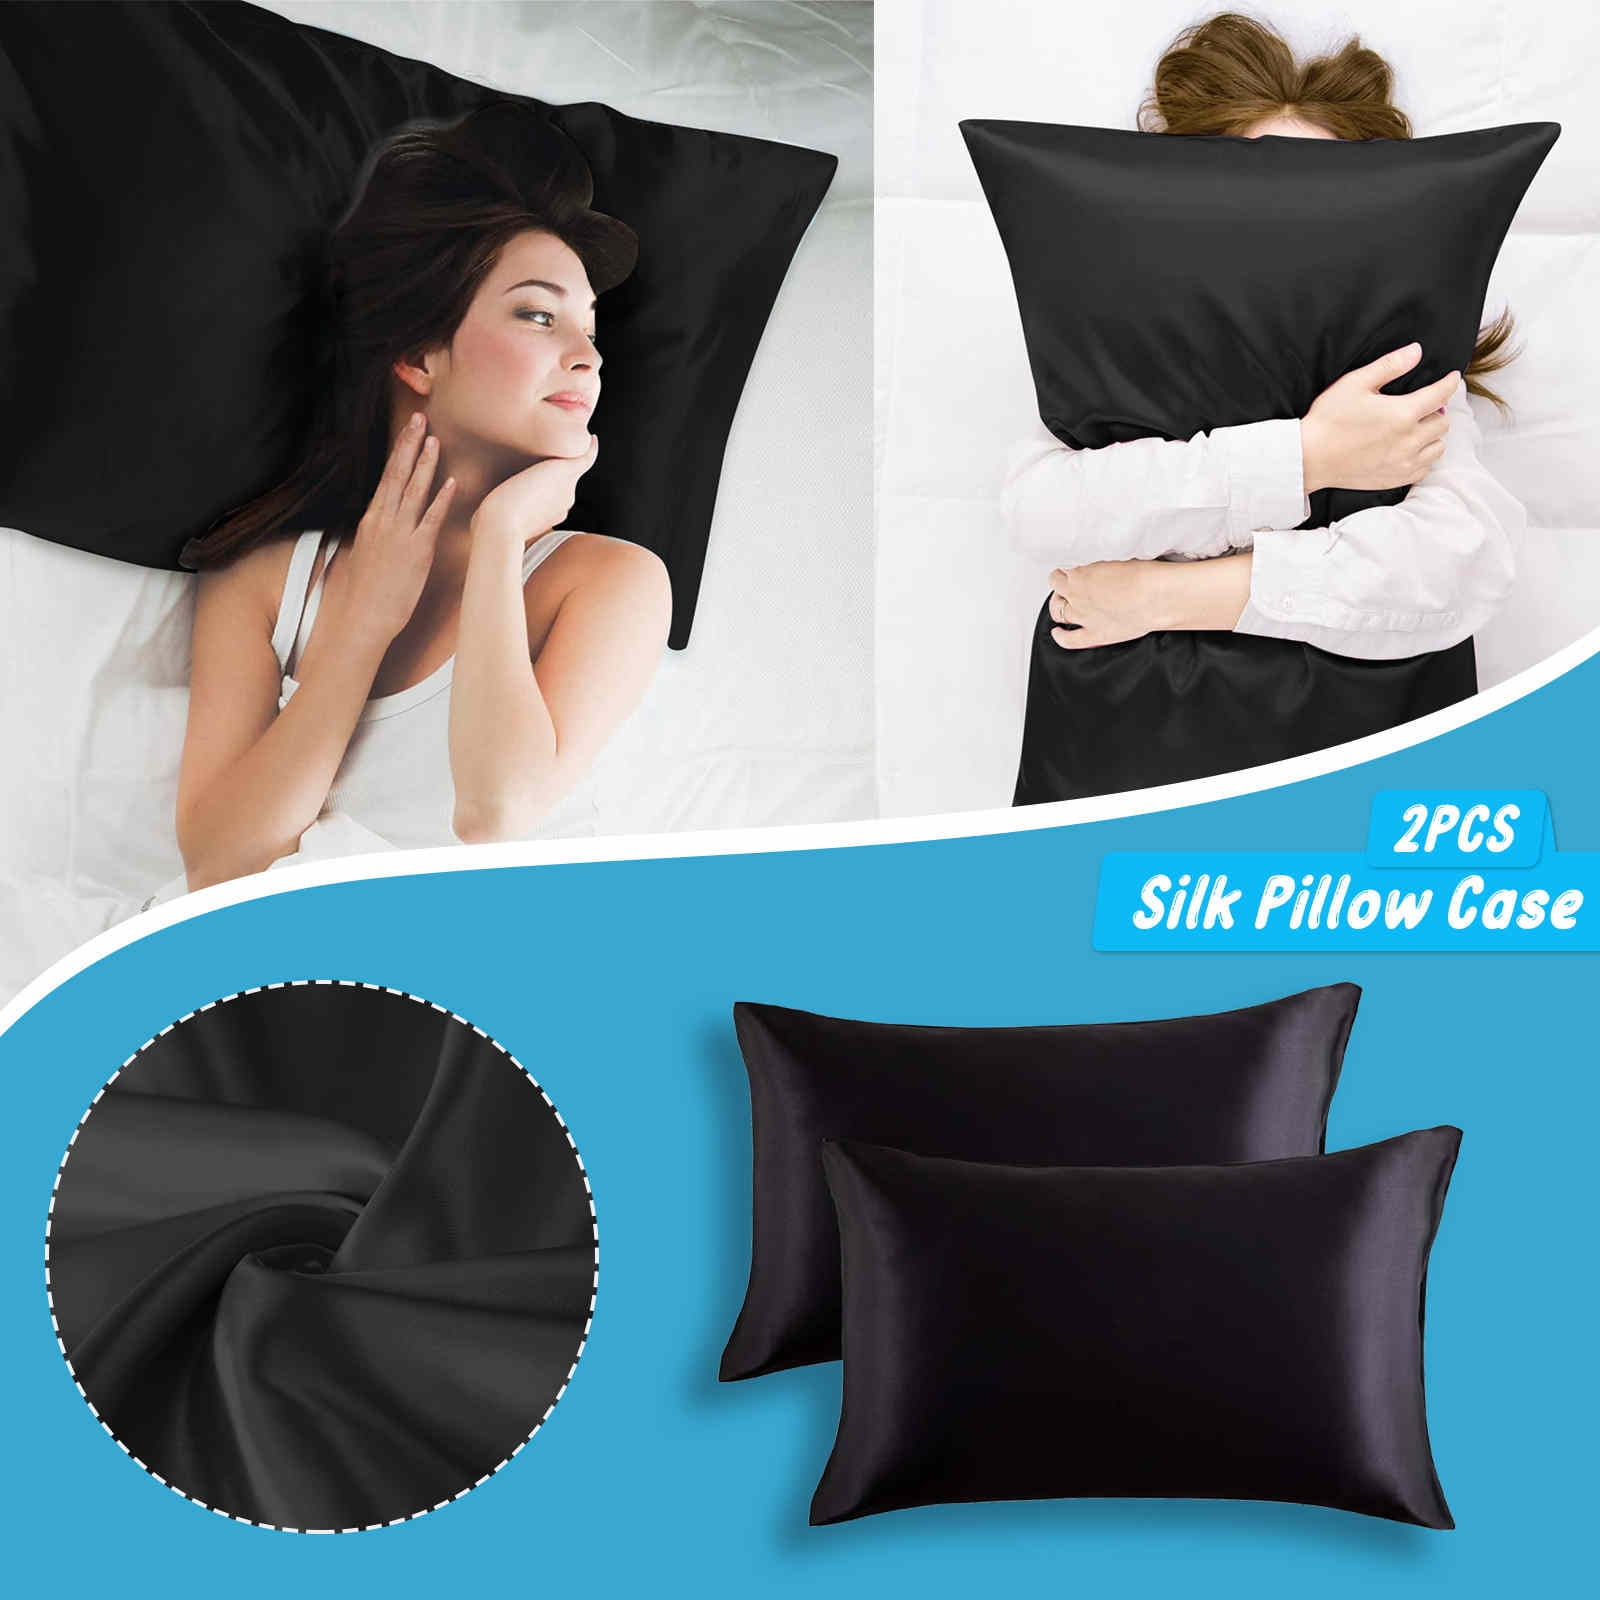 Details about   2PCS Silk Satin Standard Pillow Home Pillowcase Cover Cushion Case Decor Bed 